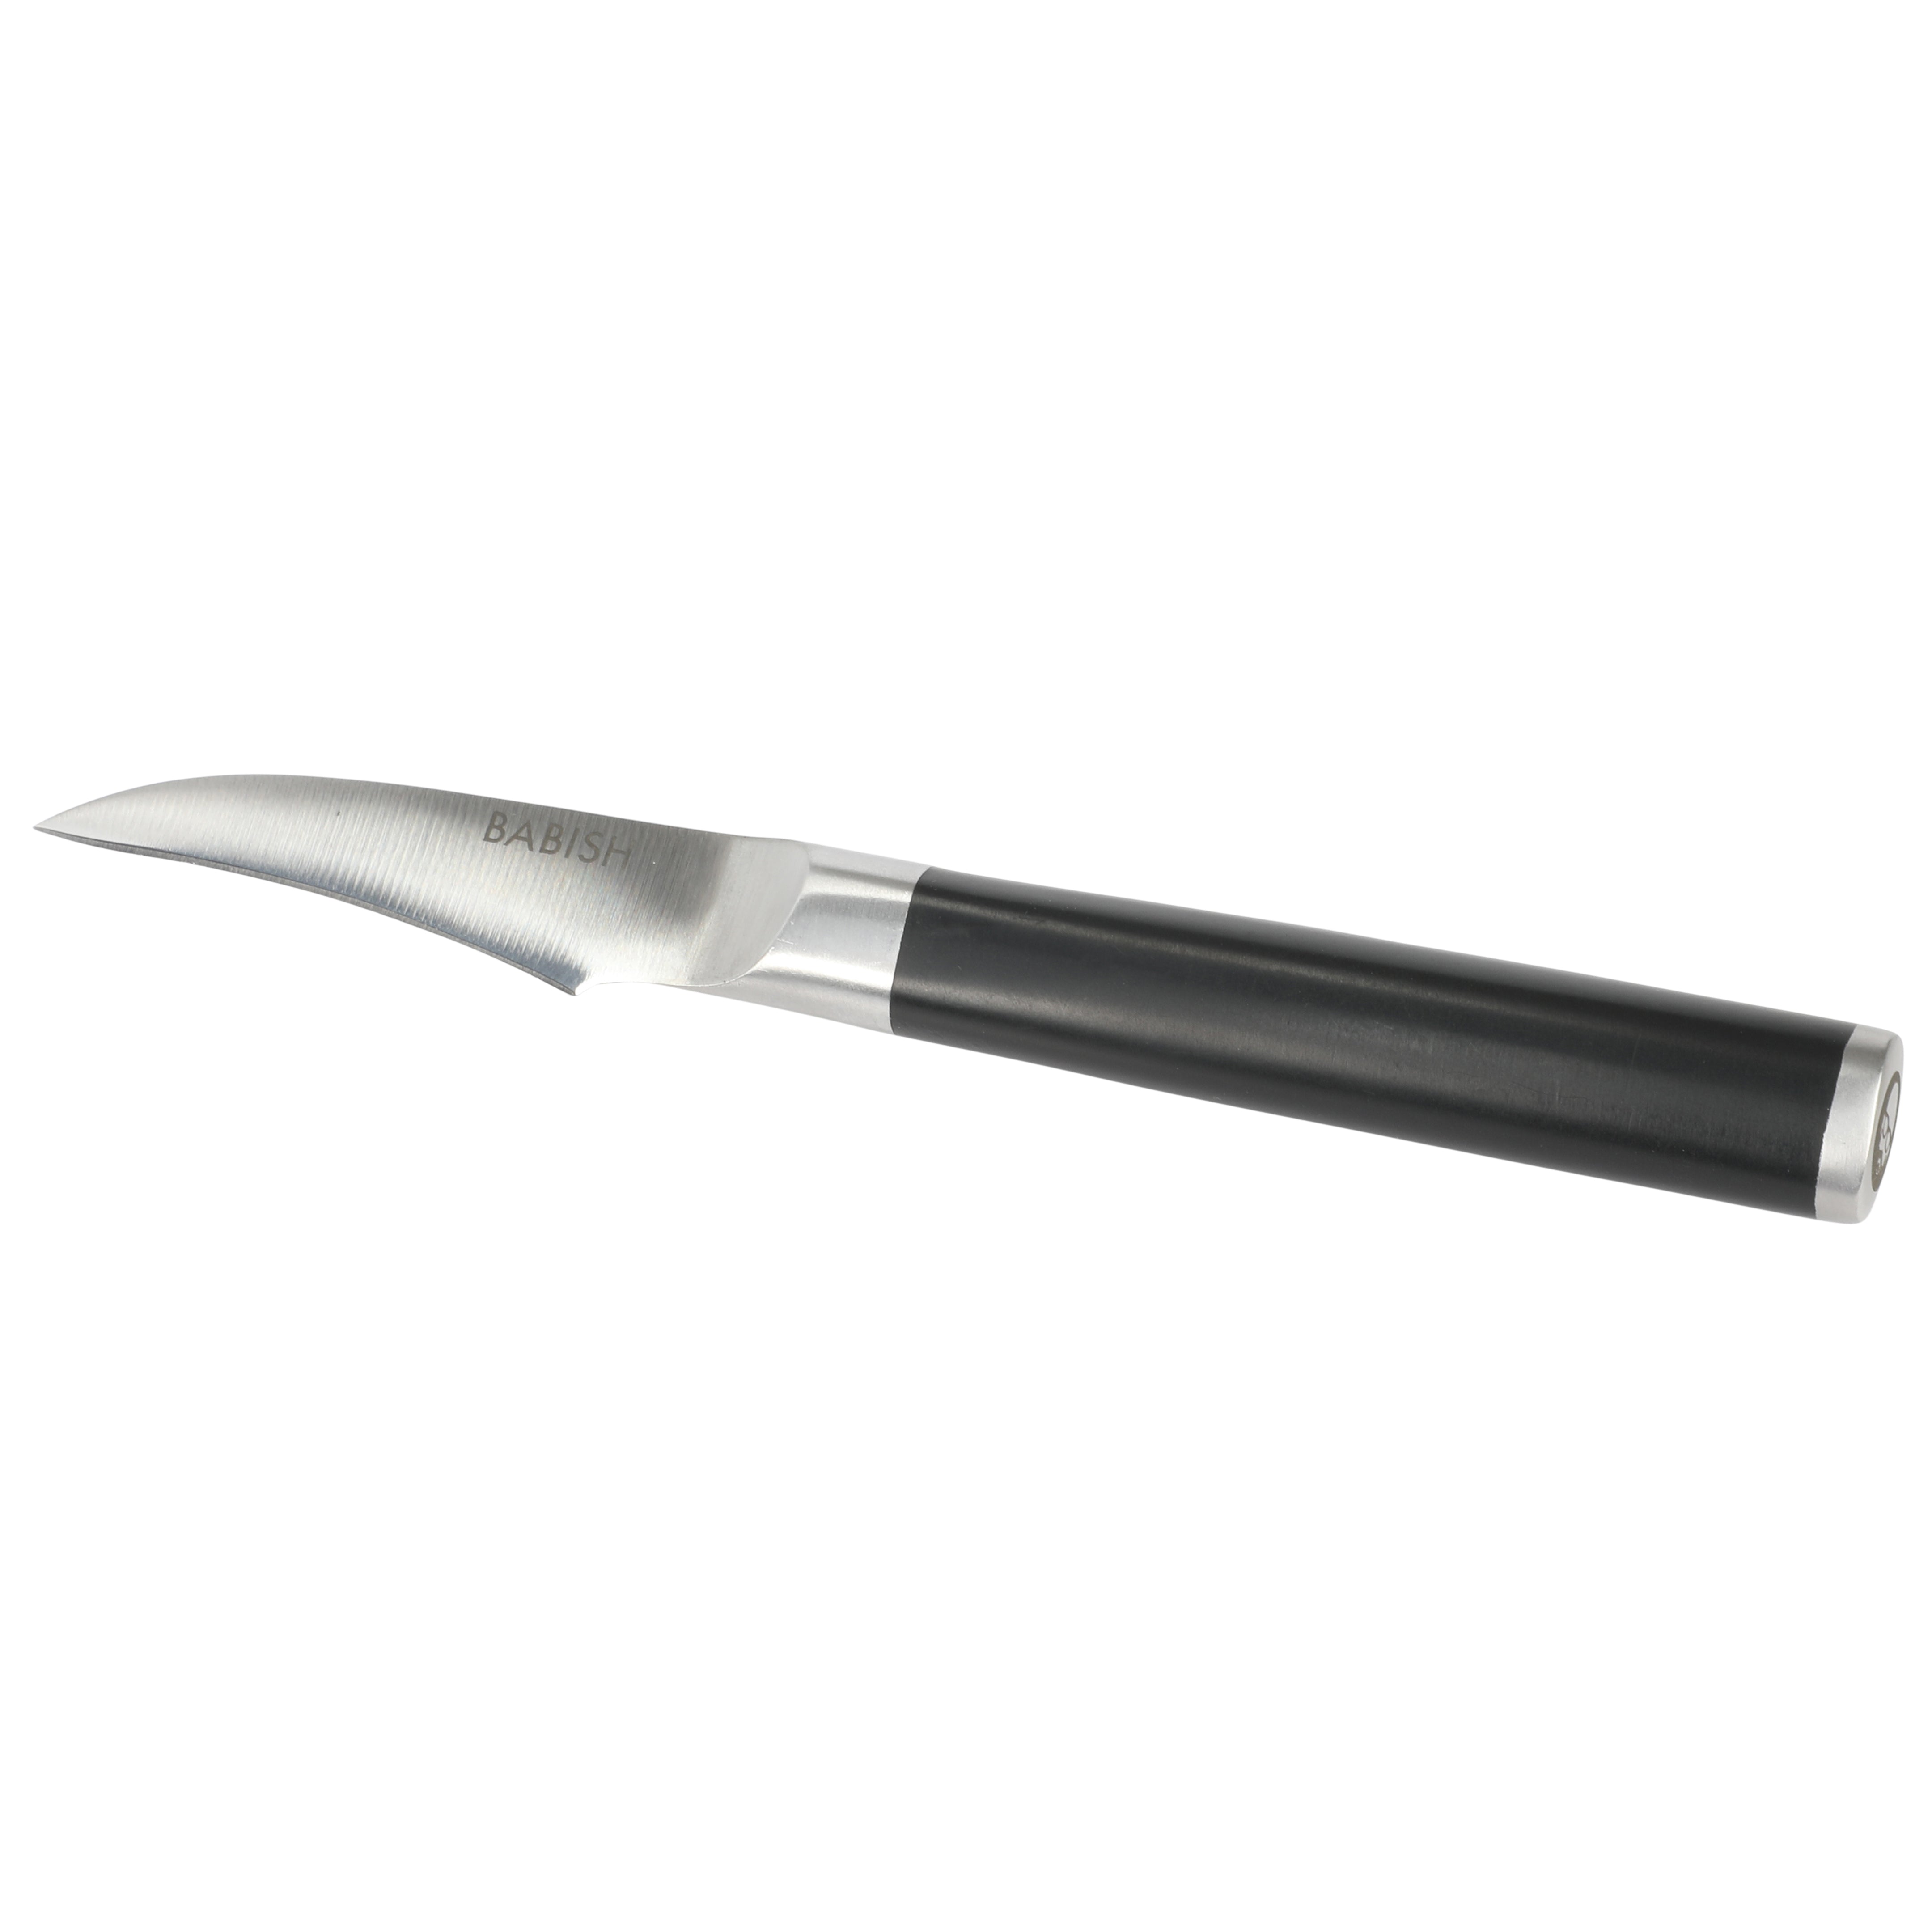 Babish High-Carbon 1.4116 German Steel Cutlery, 7.5 Clef (Cleaver